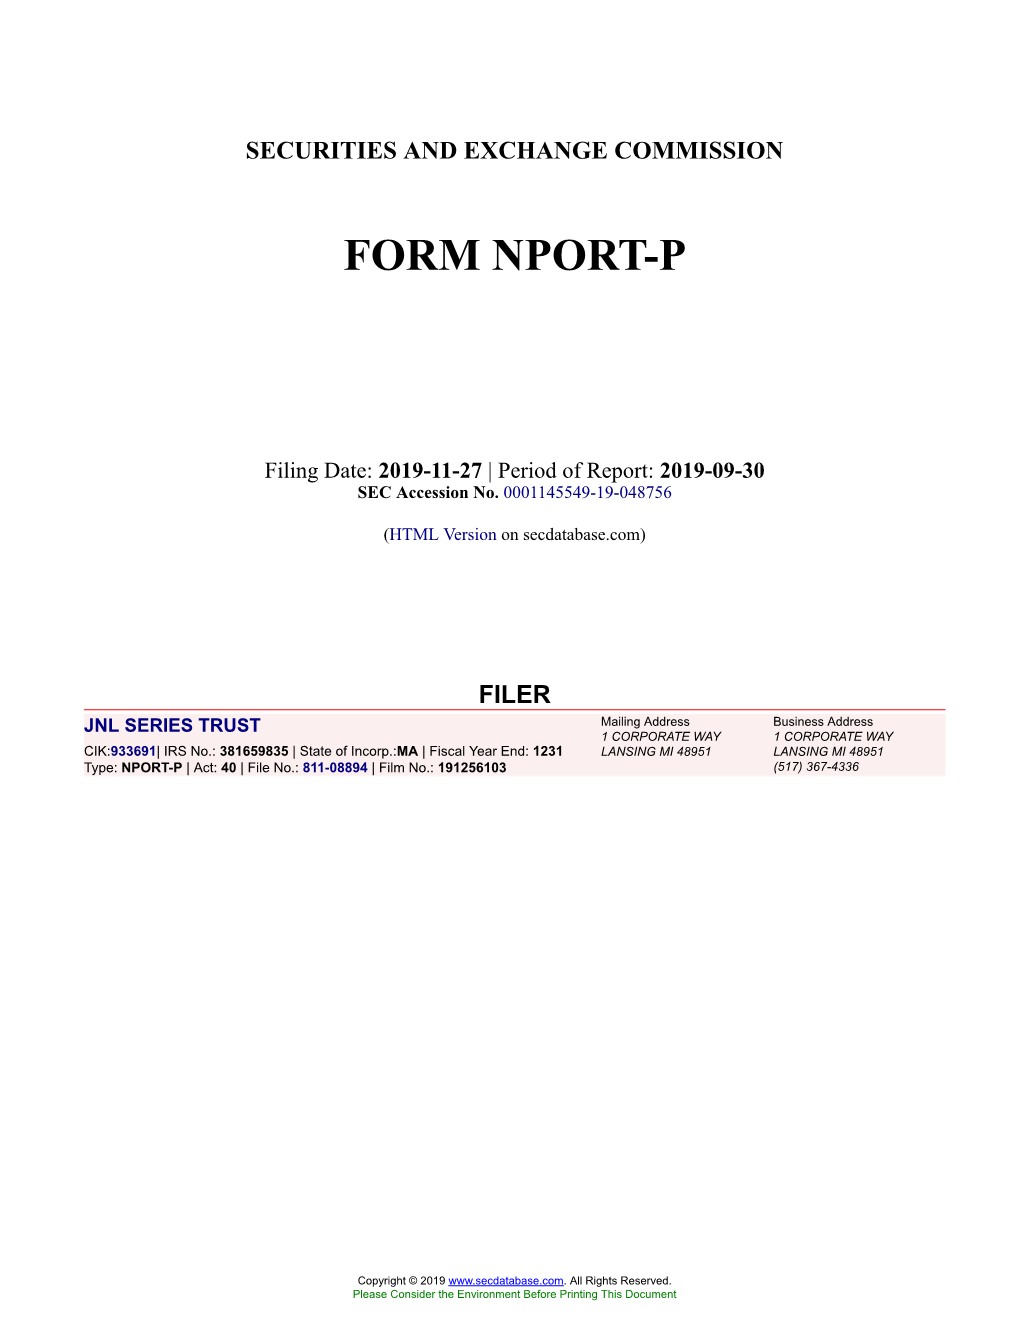 JNL SERIES TRUST Form NPORT-P Filed 2019-11